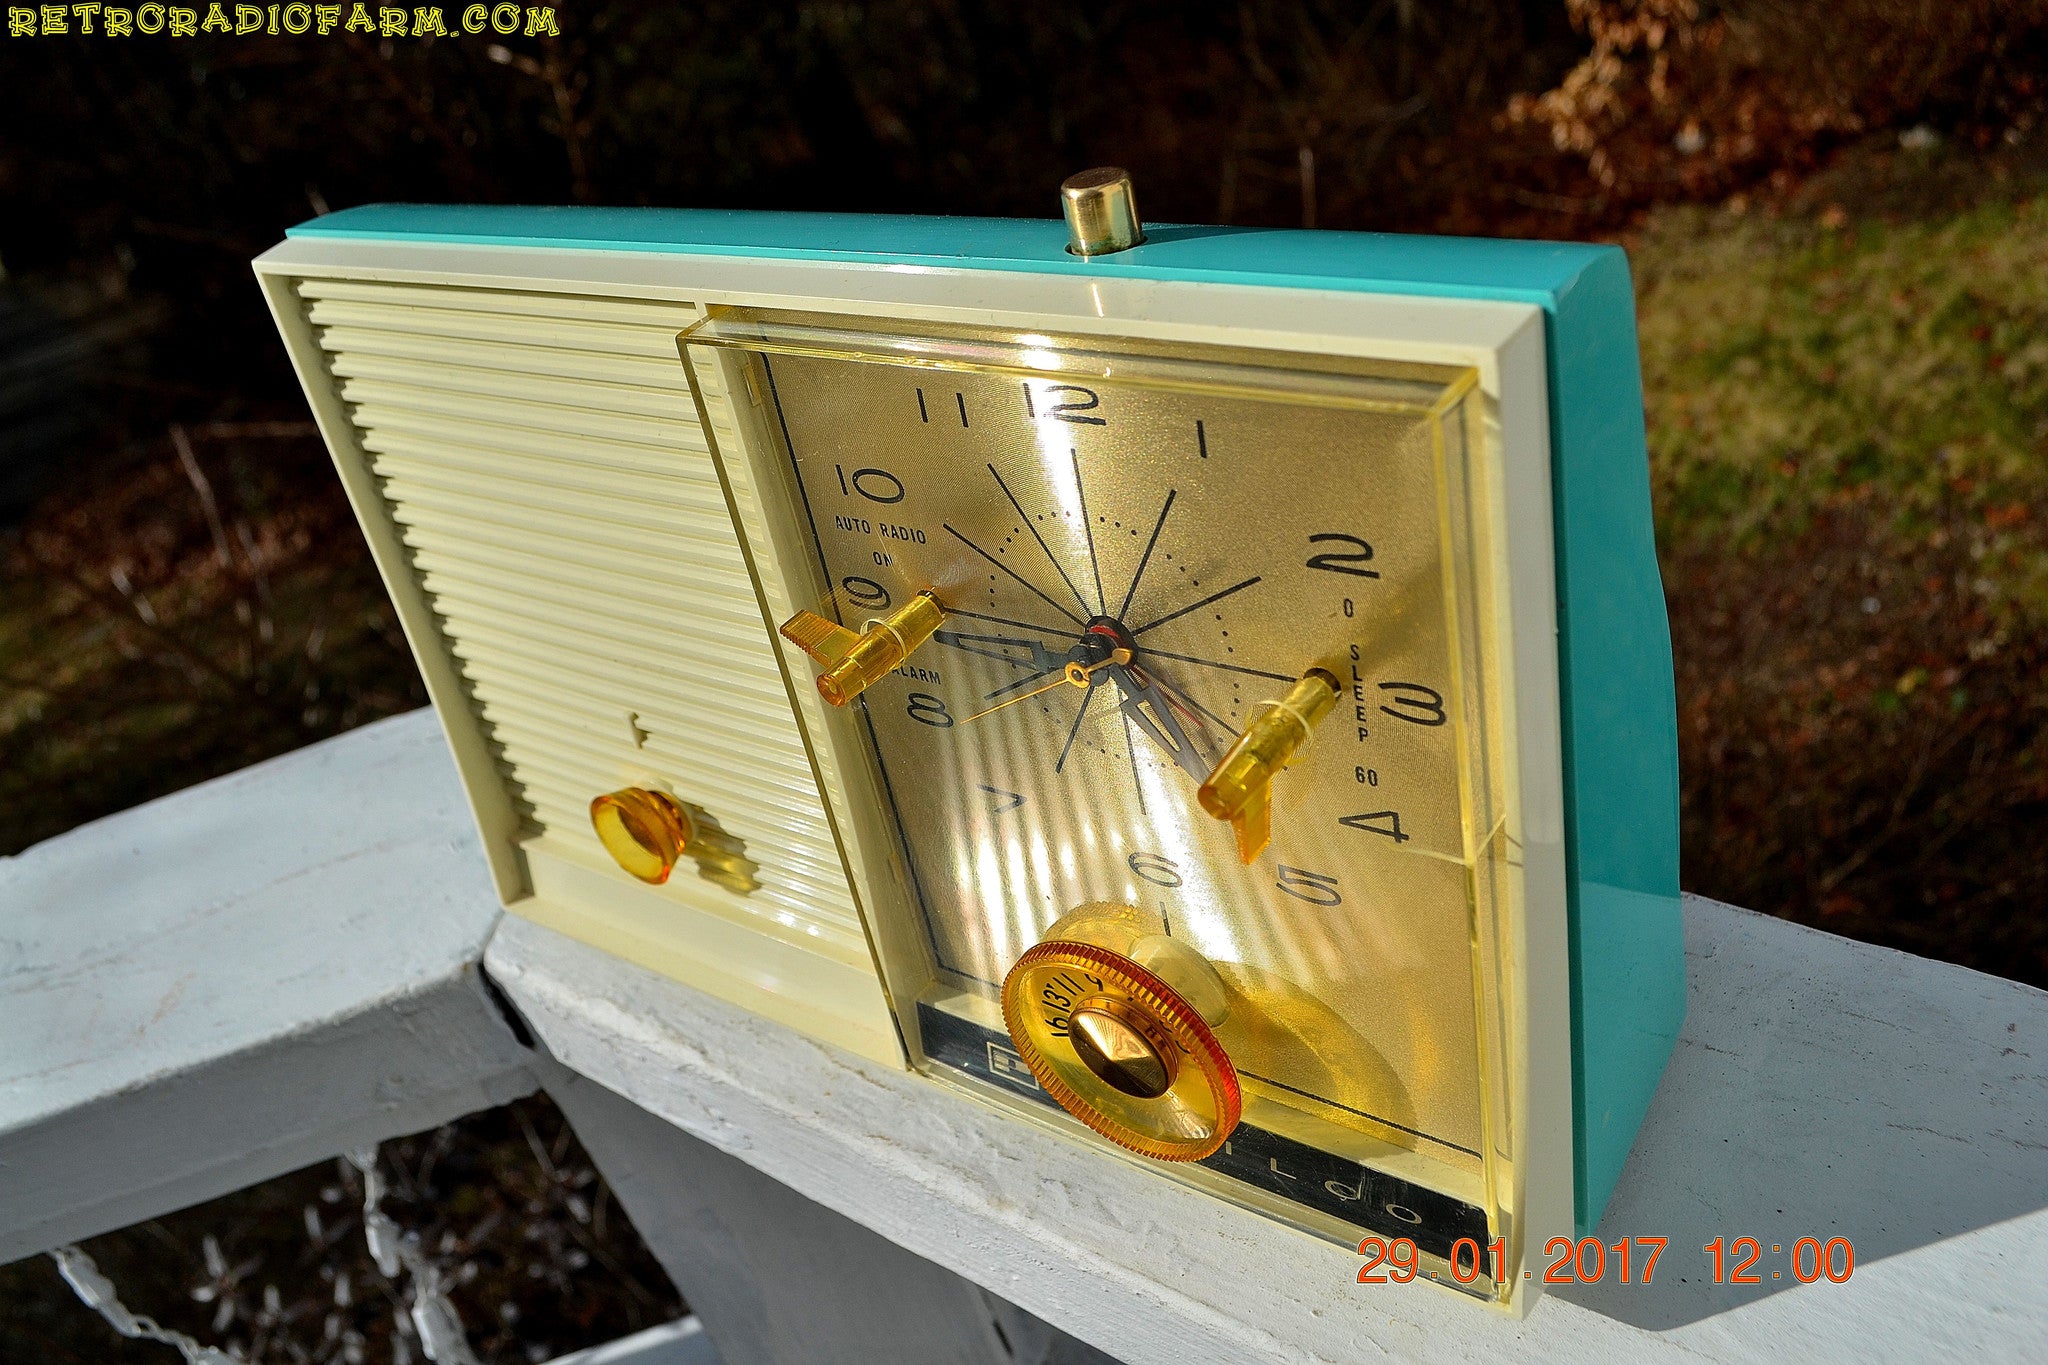 SOLD! - Apr 14, 2108 - TURQUOISE BEAUTY Mid-Century Retro Vintage 1959 Philco Model K-782-124 AM Tube Clock Radio Totally Restored! - [product_type} - Philco - Retro Radio Farm